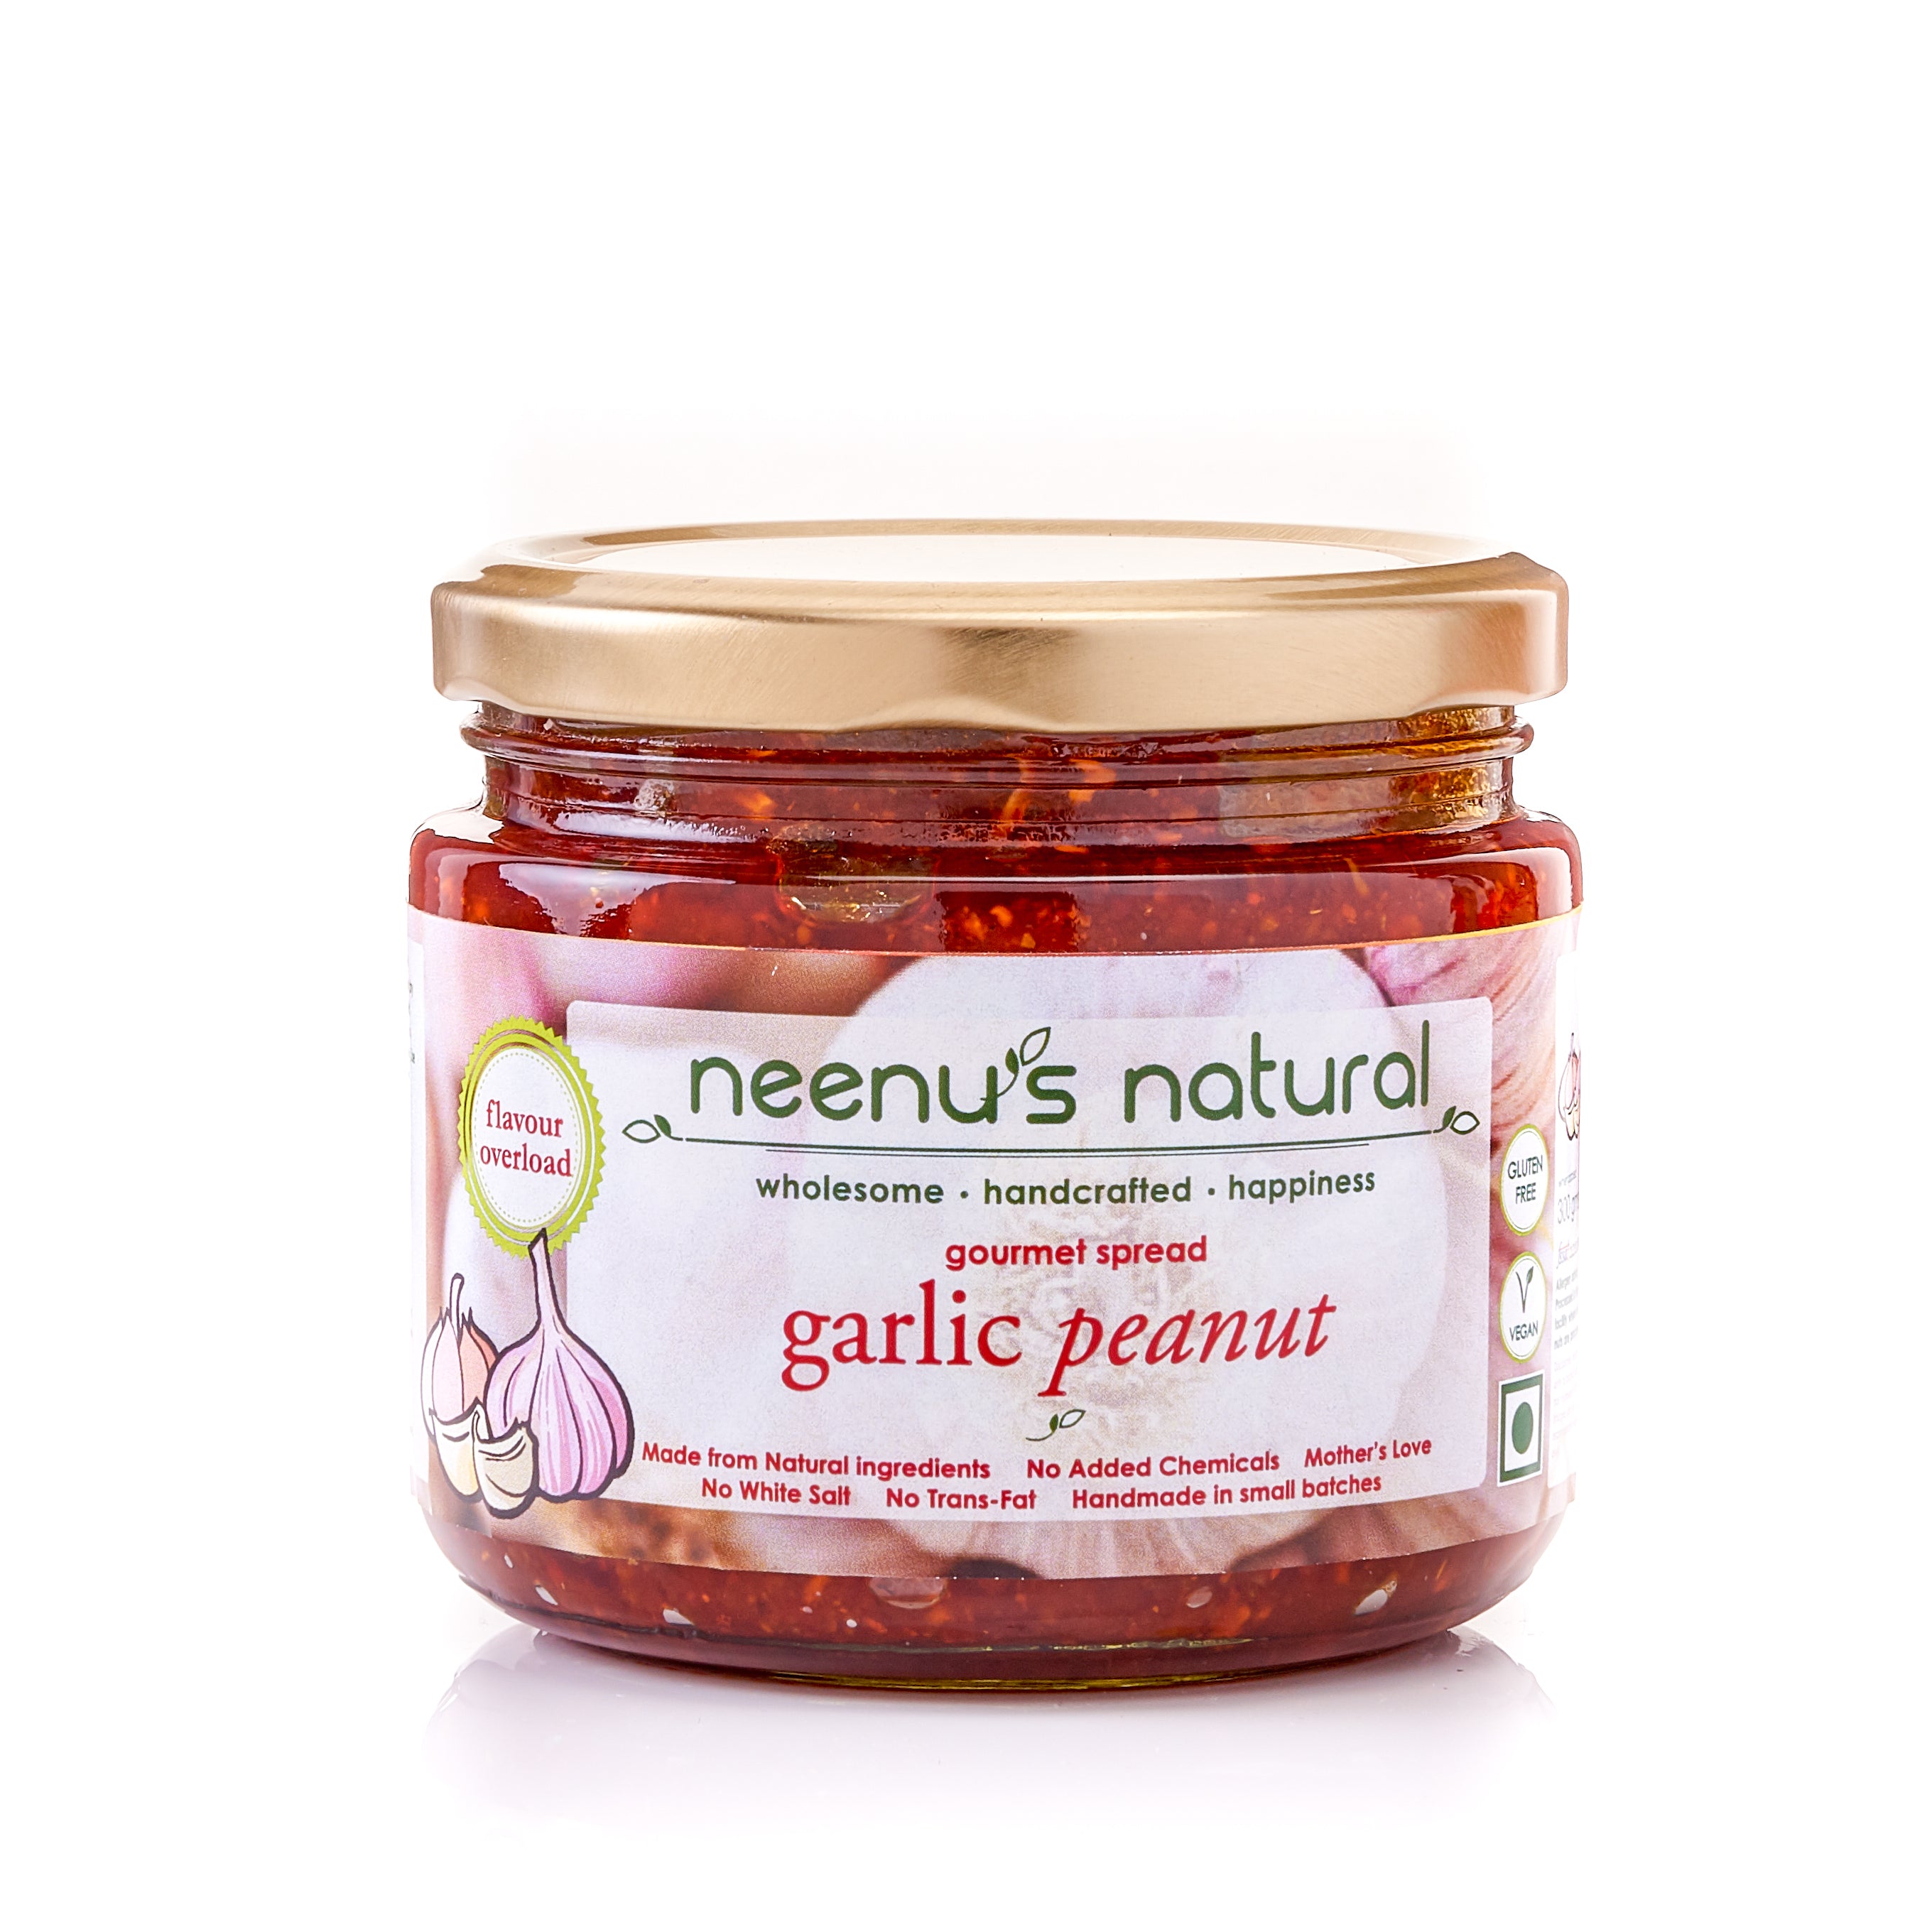 garlic peanut gourmet spread